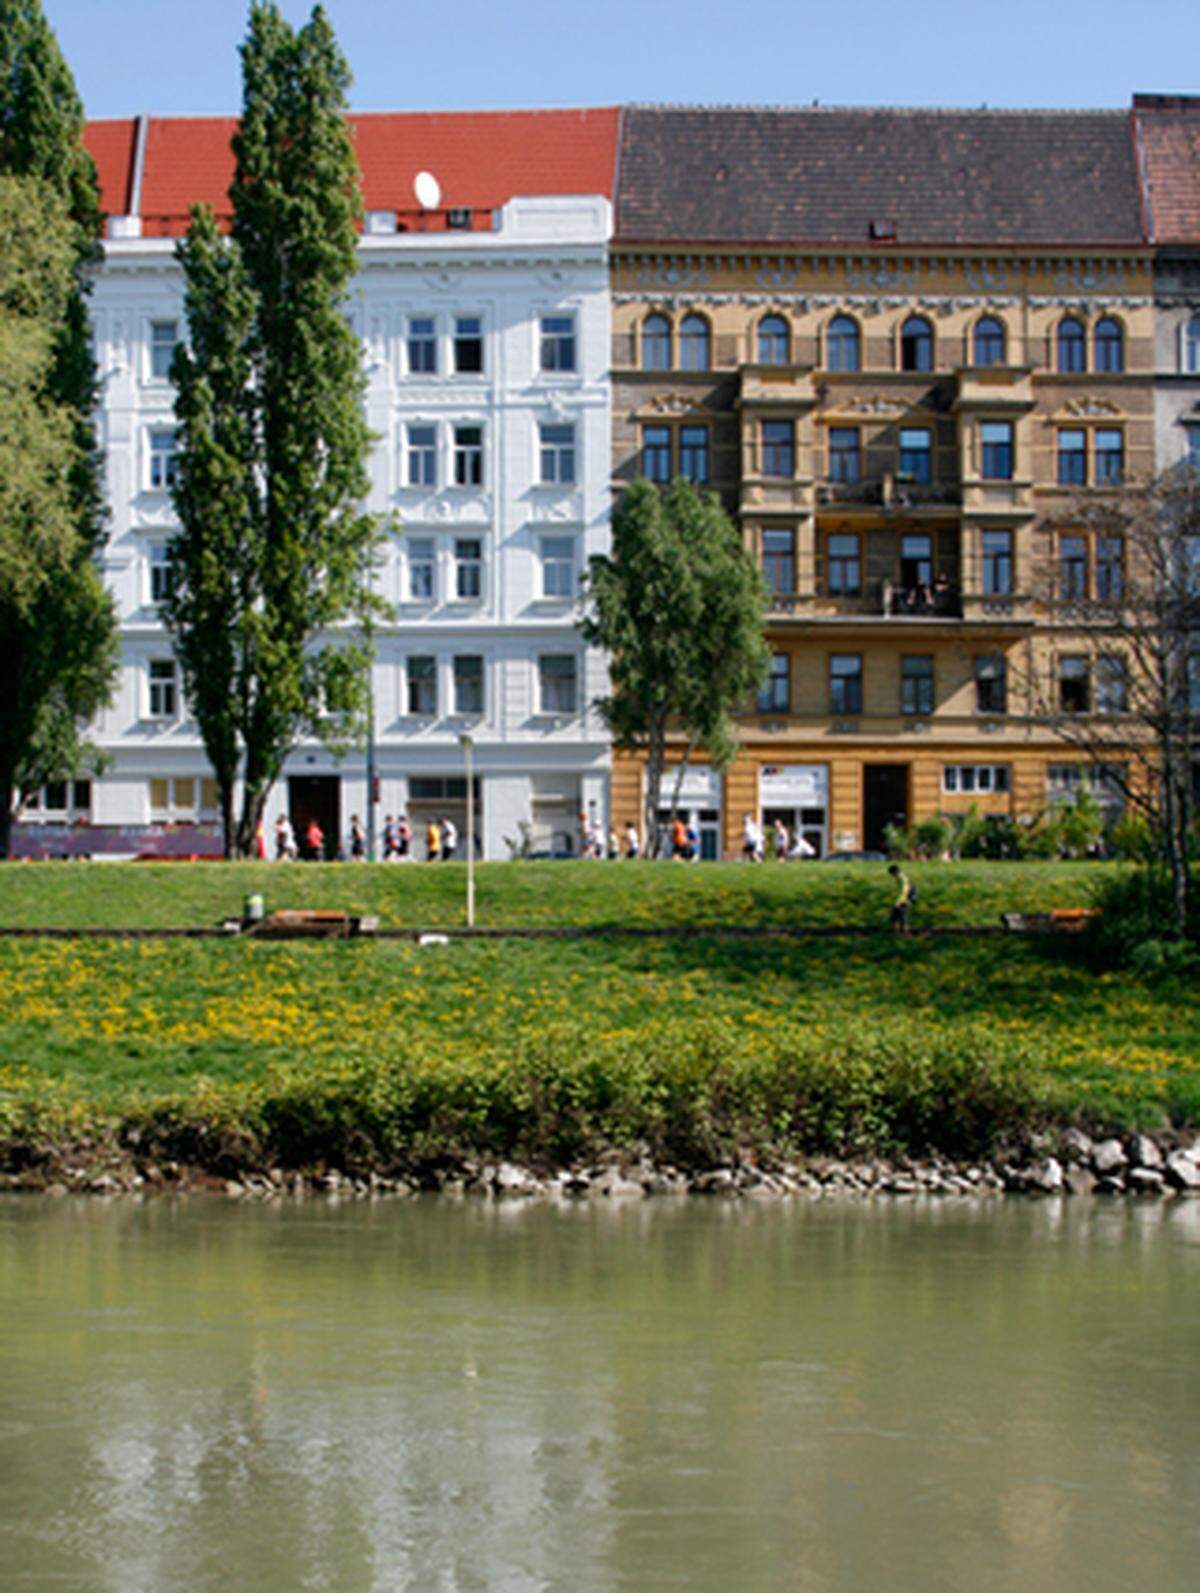 Nach dem Prater ging es dem Donaukanal entlang.